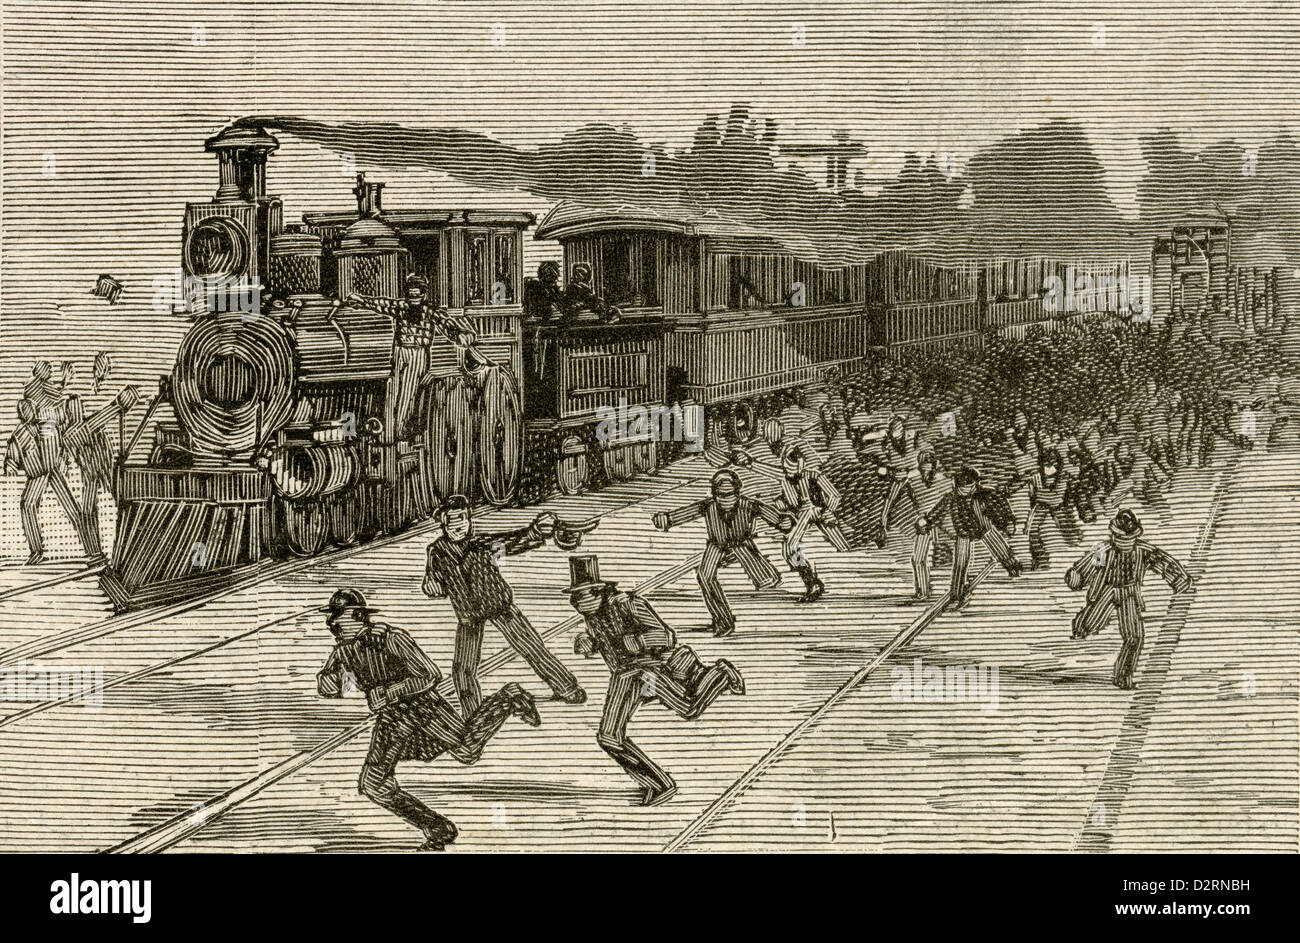 1890 engraving, Nellie Bly's train arrives in Philadelphia, Pennsylvania. Stock Photo